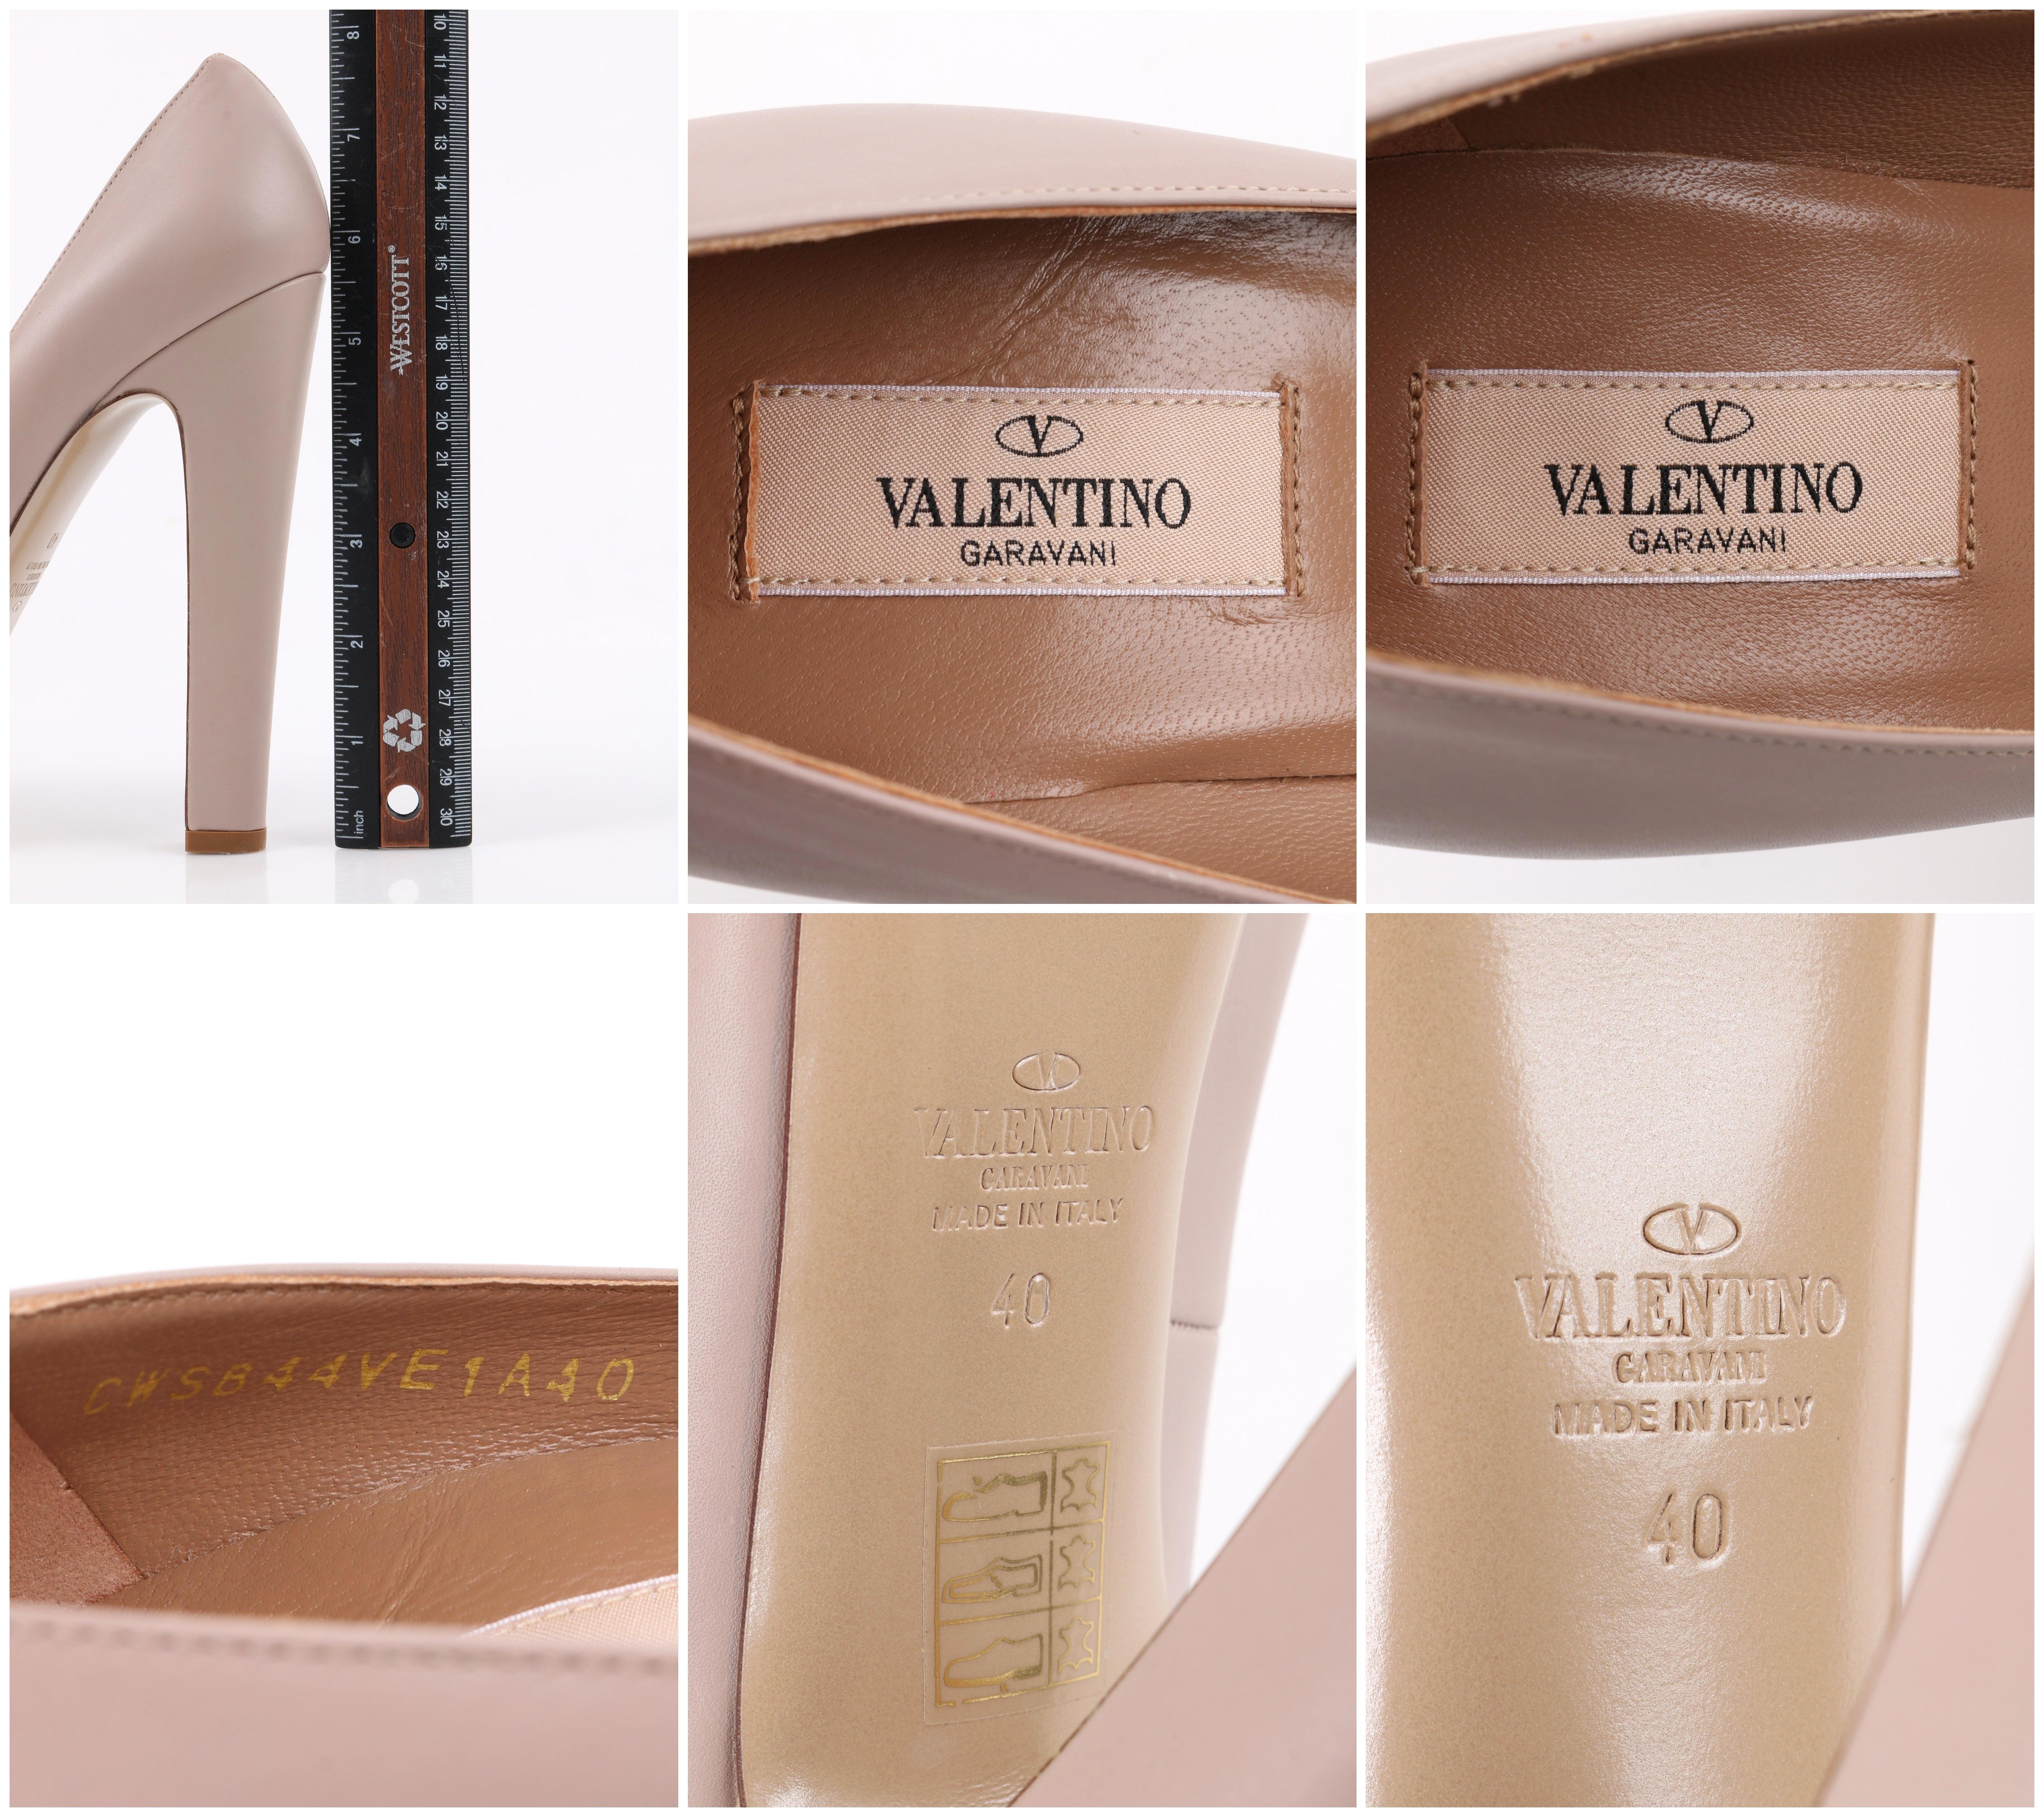 VALENTINO Garavani Nude Leather Classic Platform Pumps Heels NIB 4